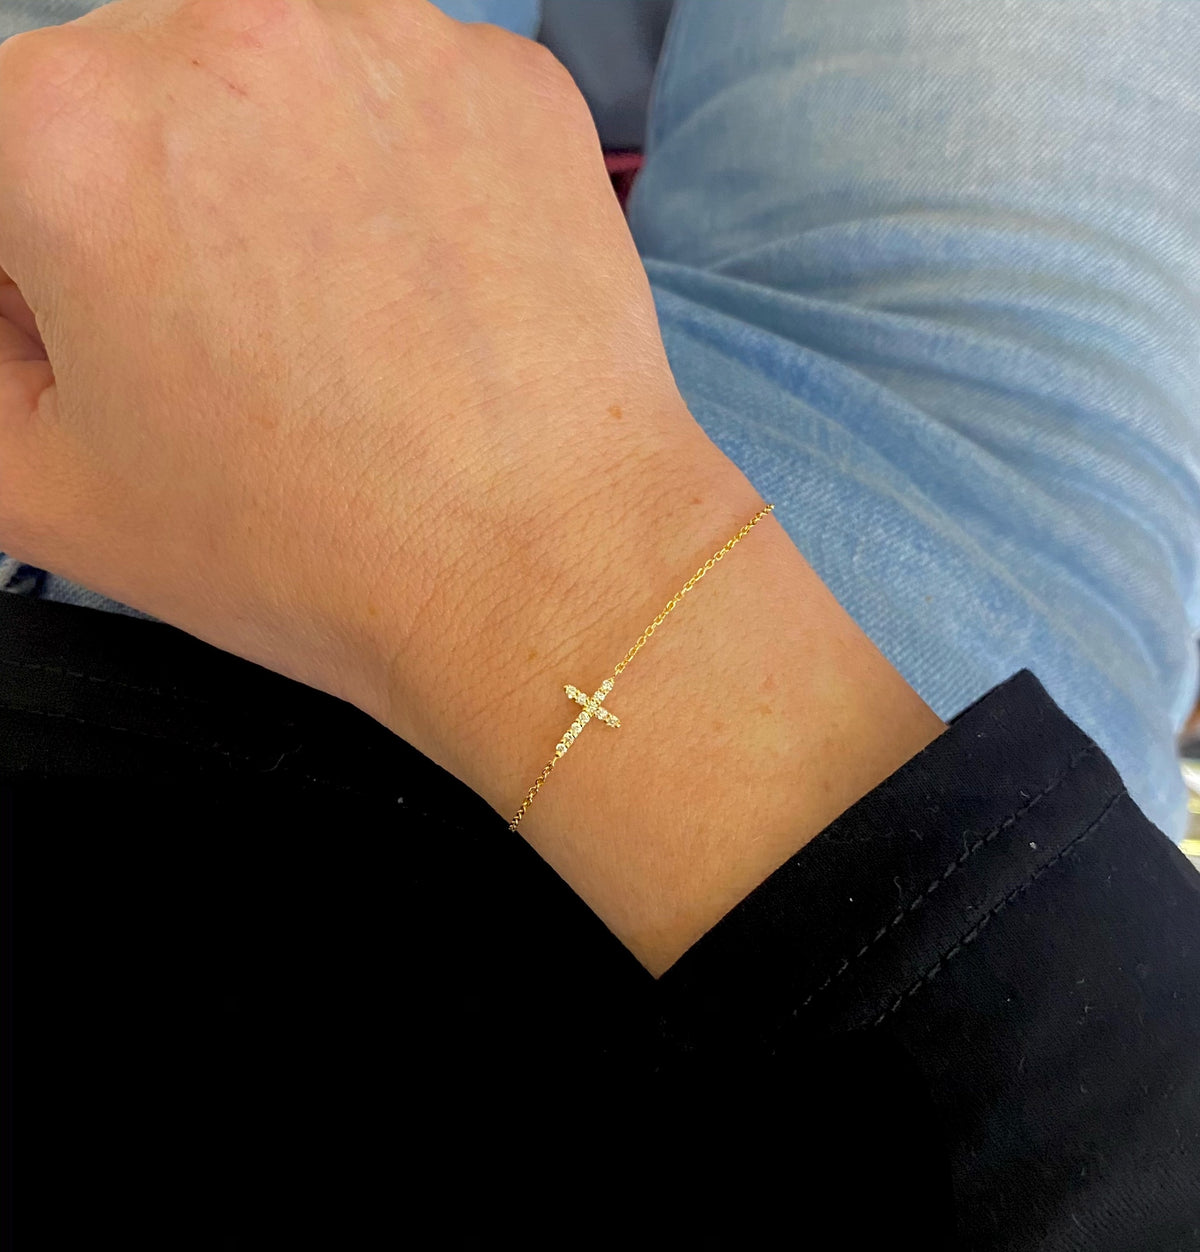 Esther Dainty Diamond Cross Bracelet